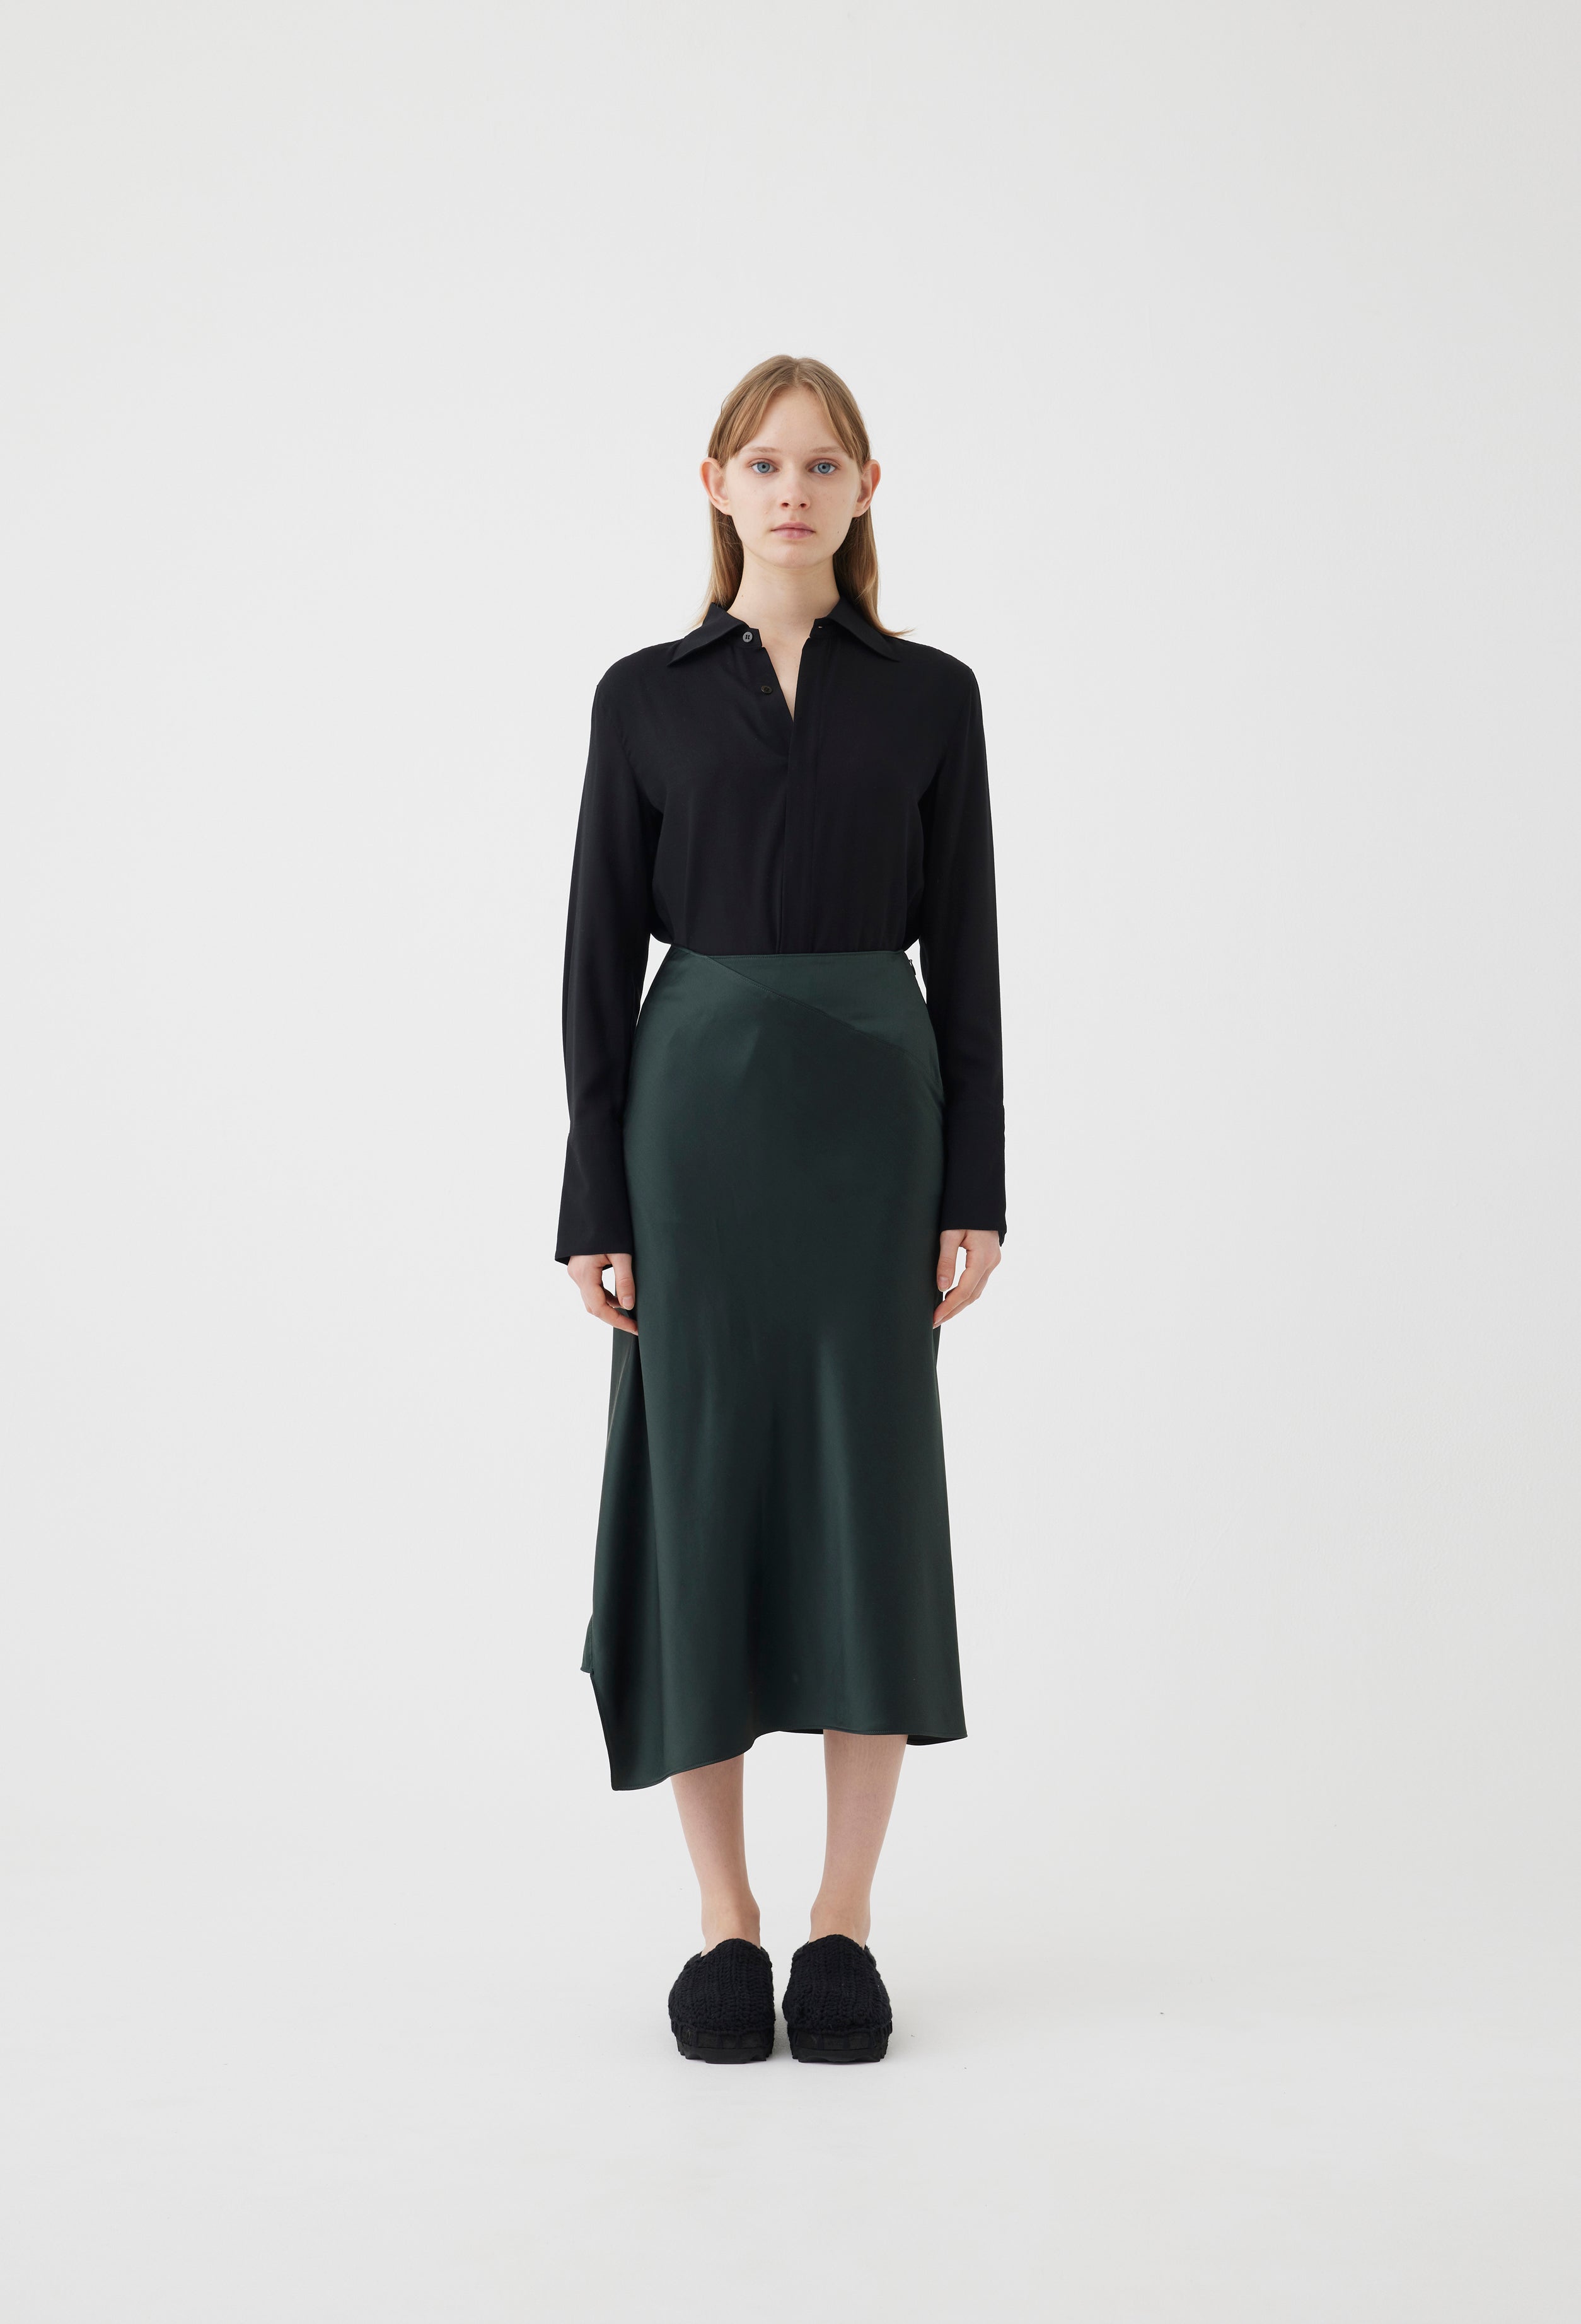 Silk Asymmetrical Skirt in Forest Green